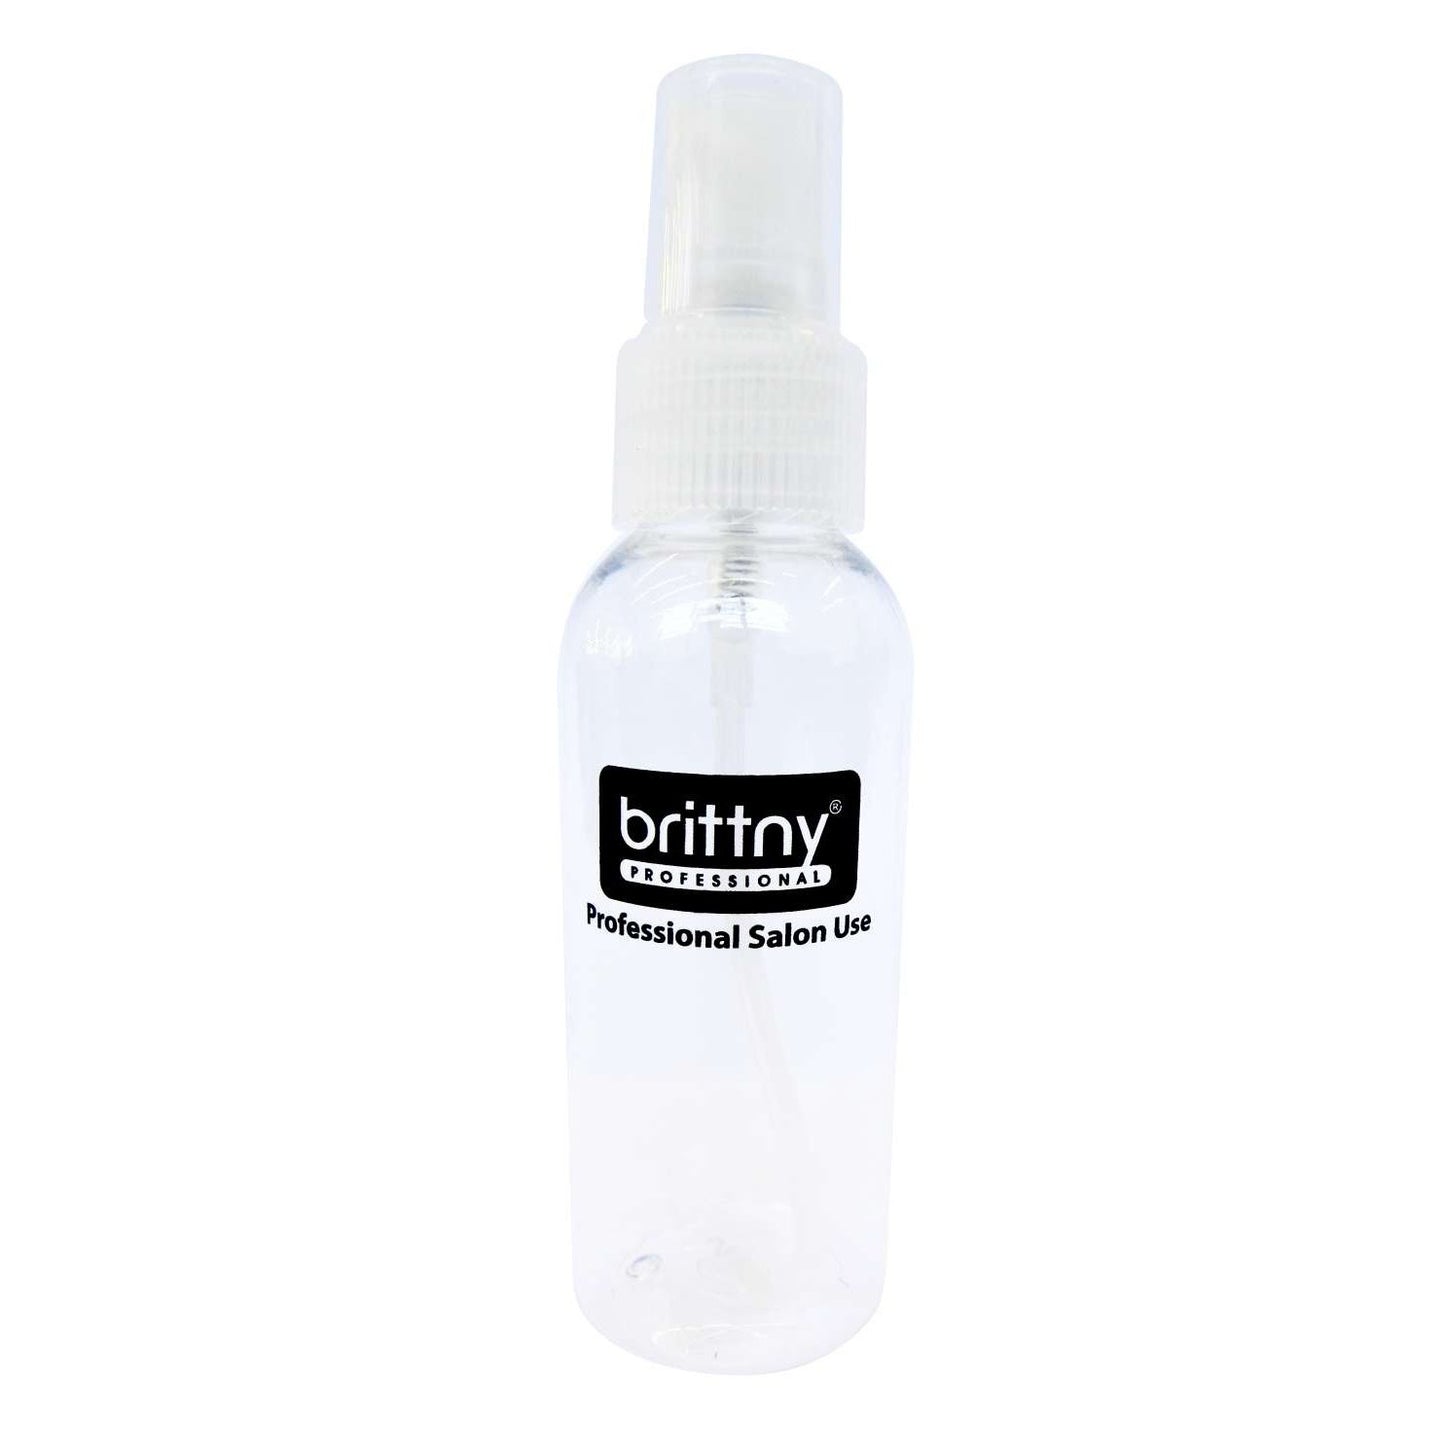 Brittny Bottle Applicator Spray